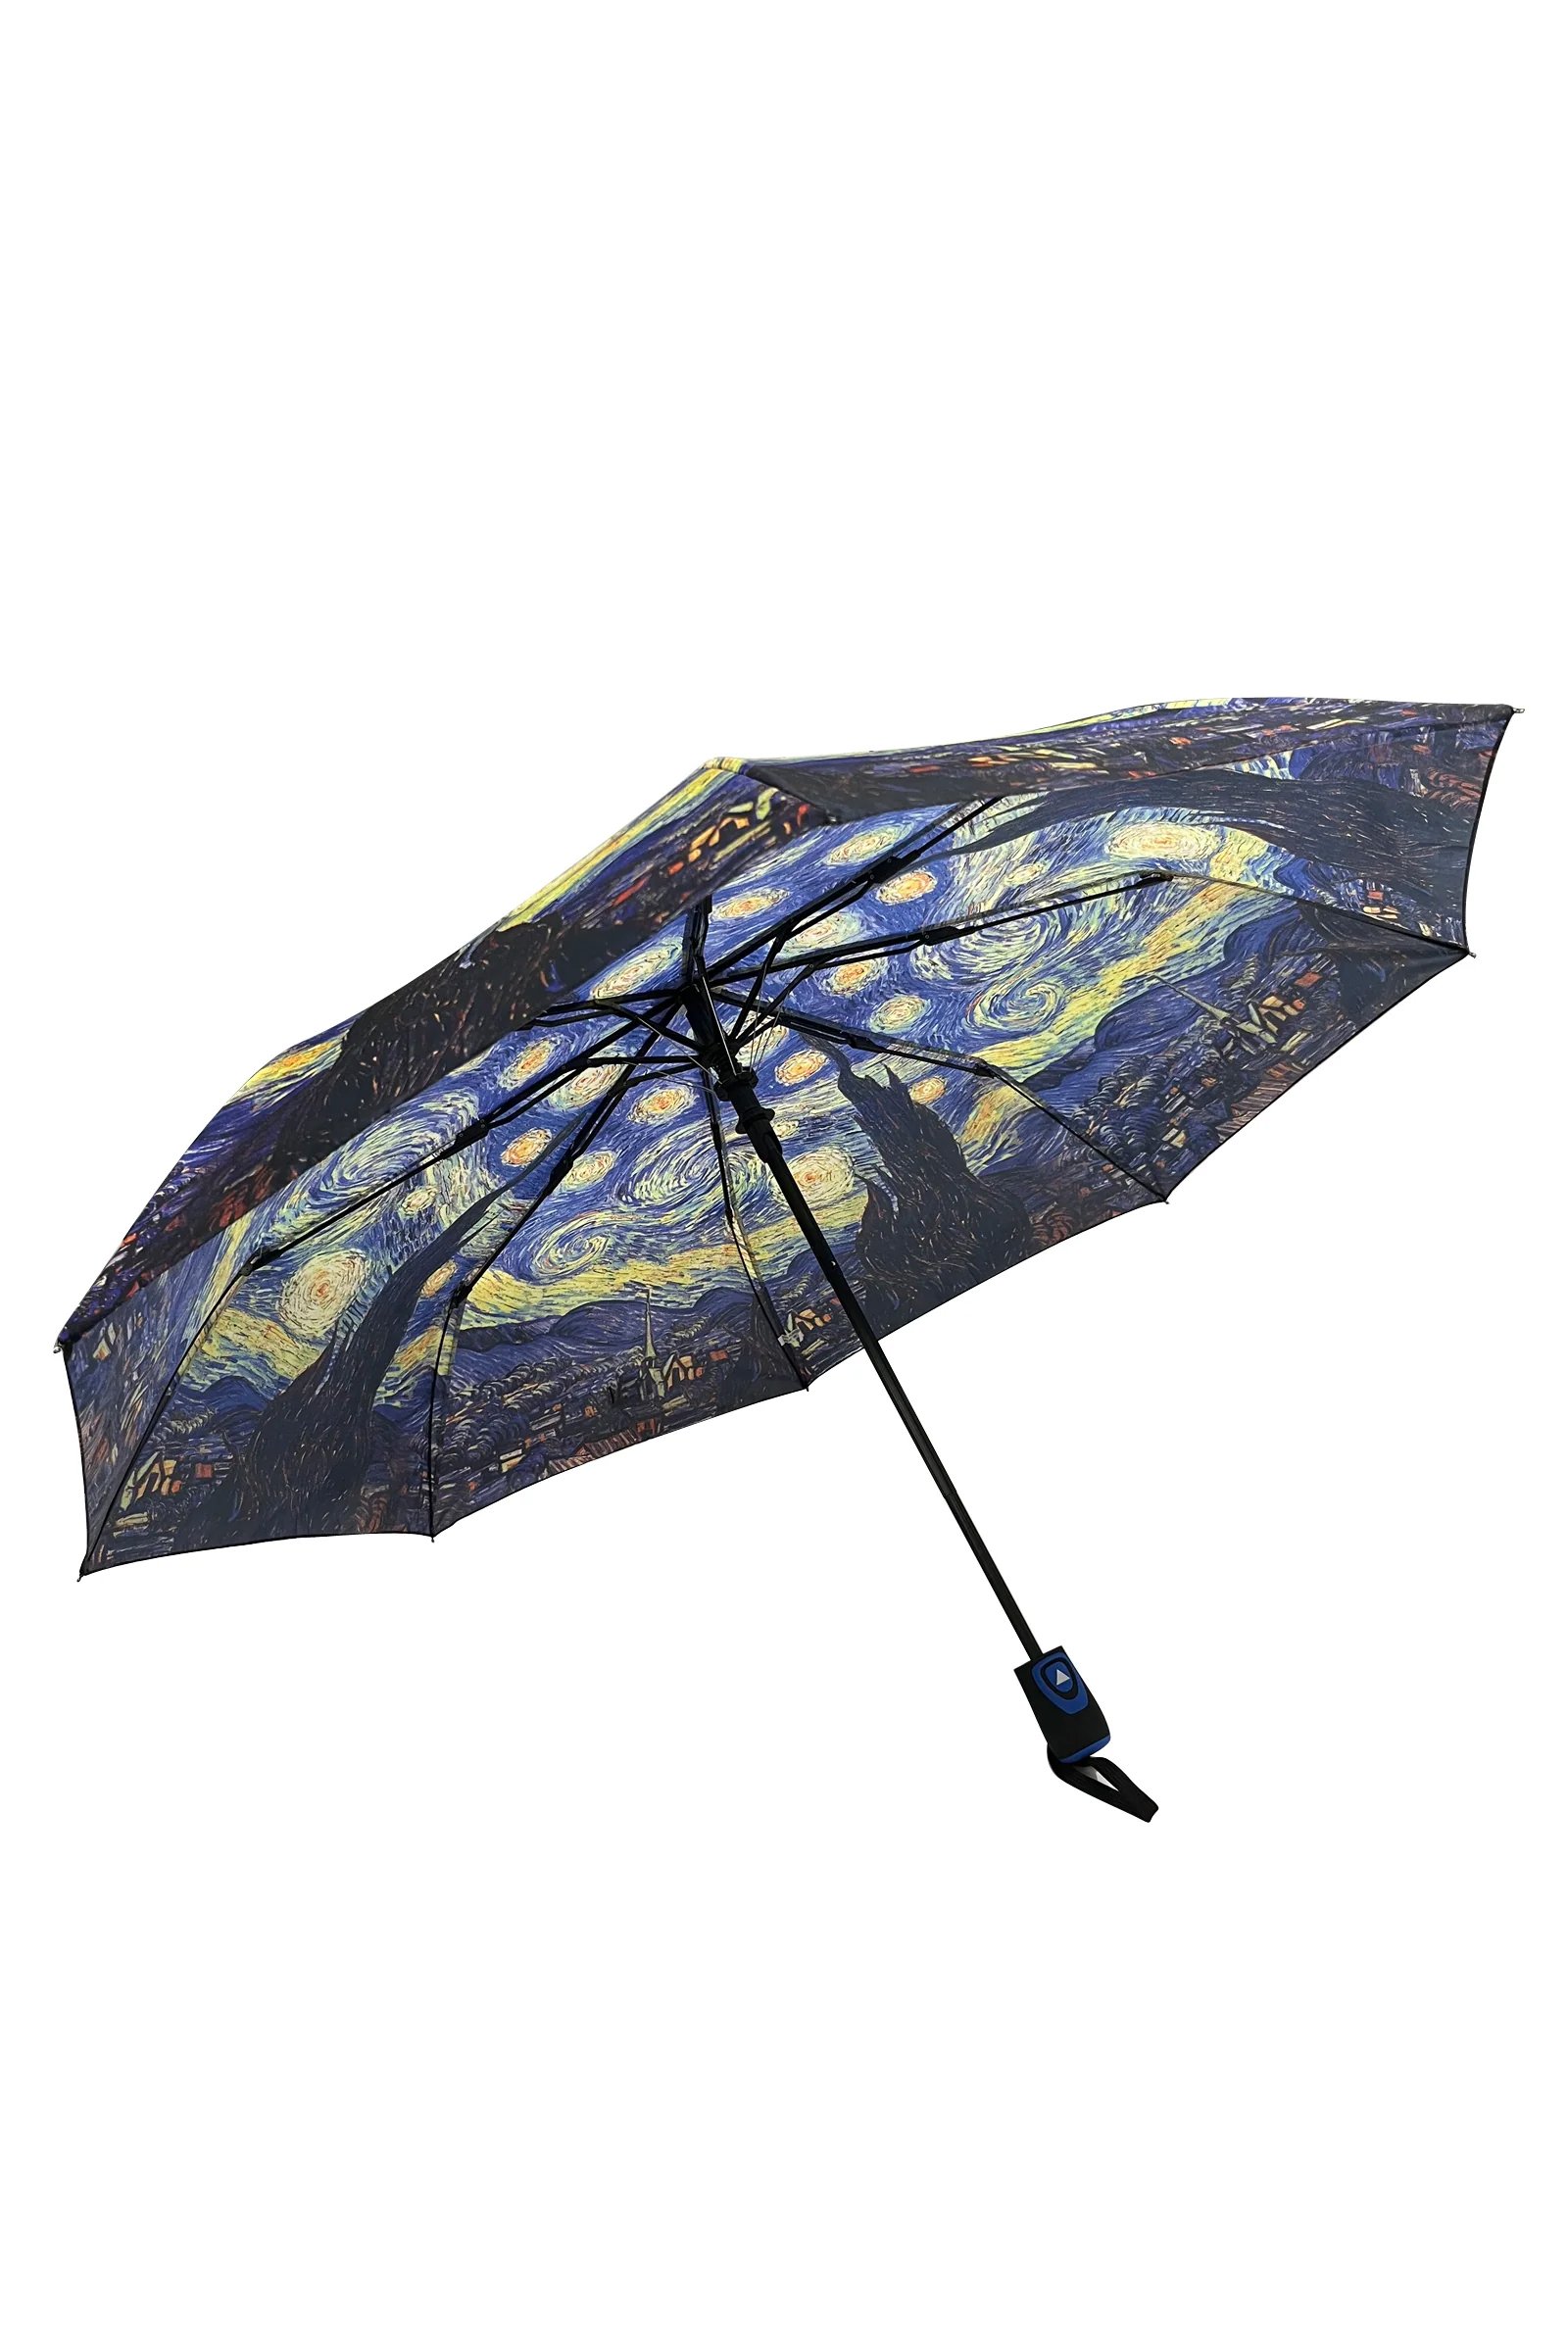 Van Gogh Starry Night umbrella